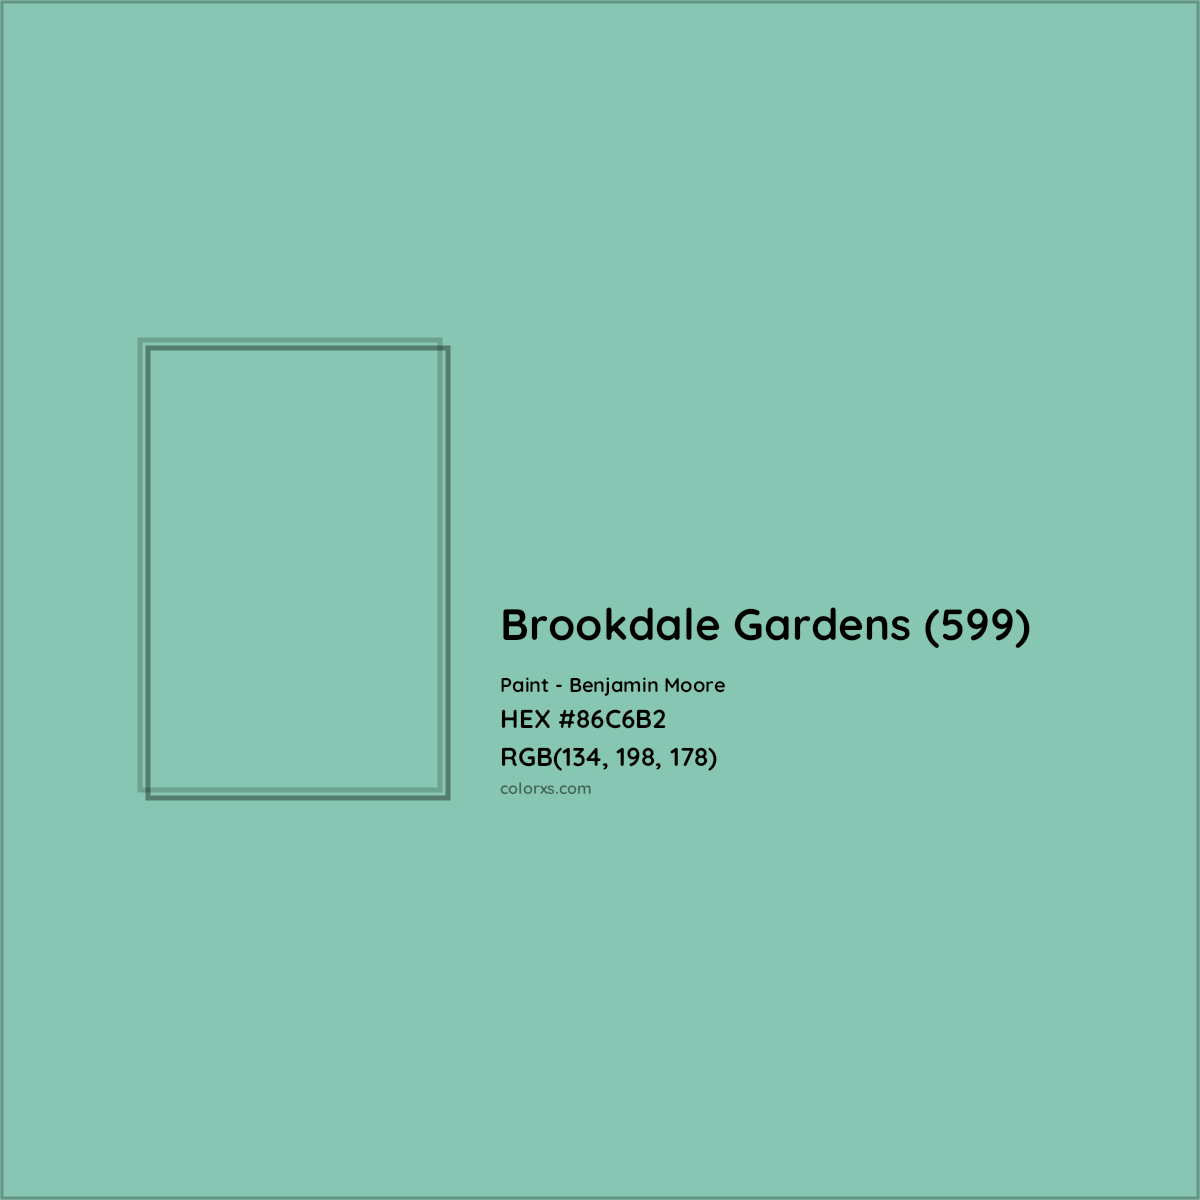 HEX #86C6B2 Brookdale Gardens (599) Paint Benjamin Moore - Color Code